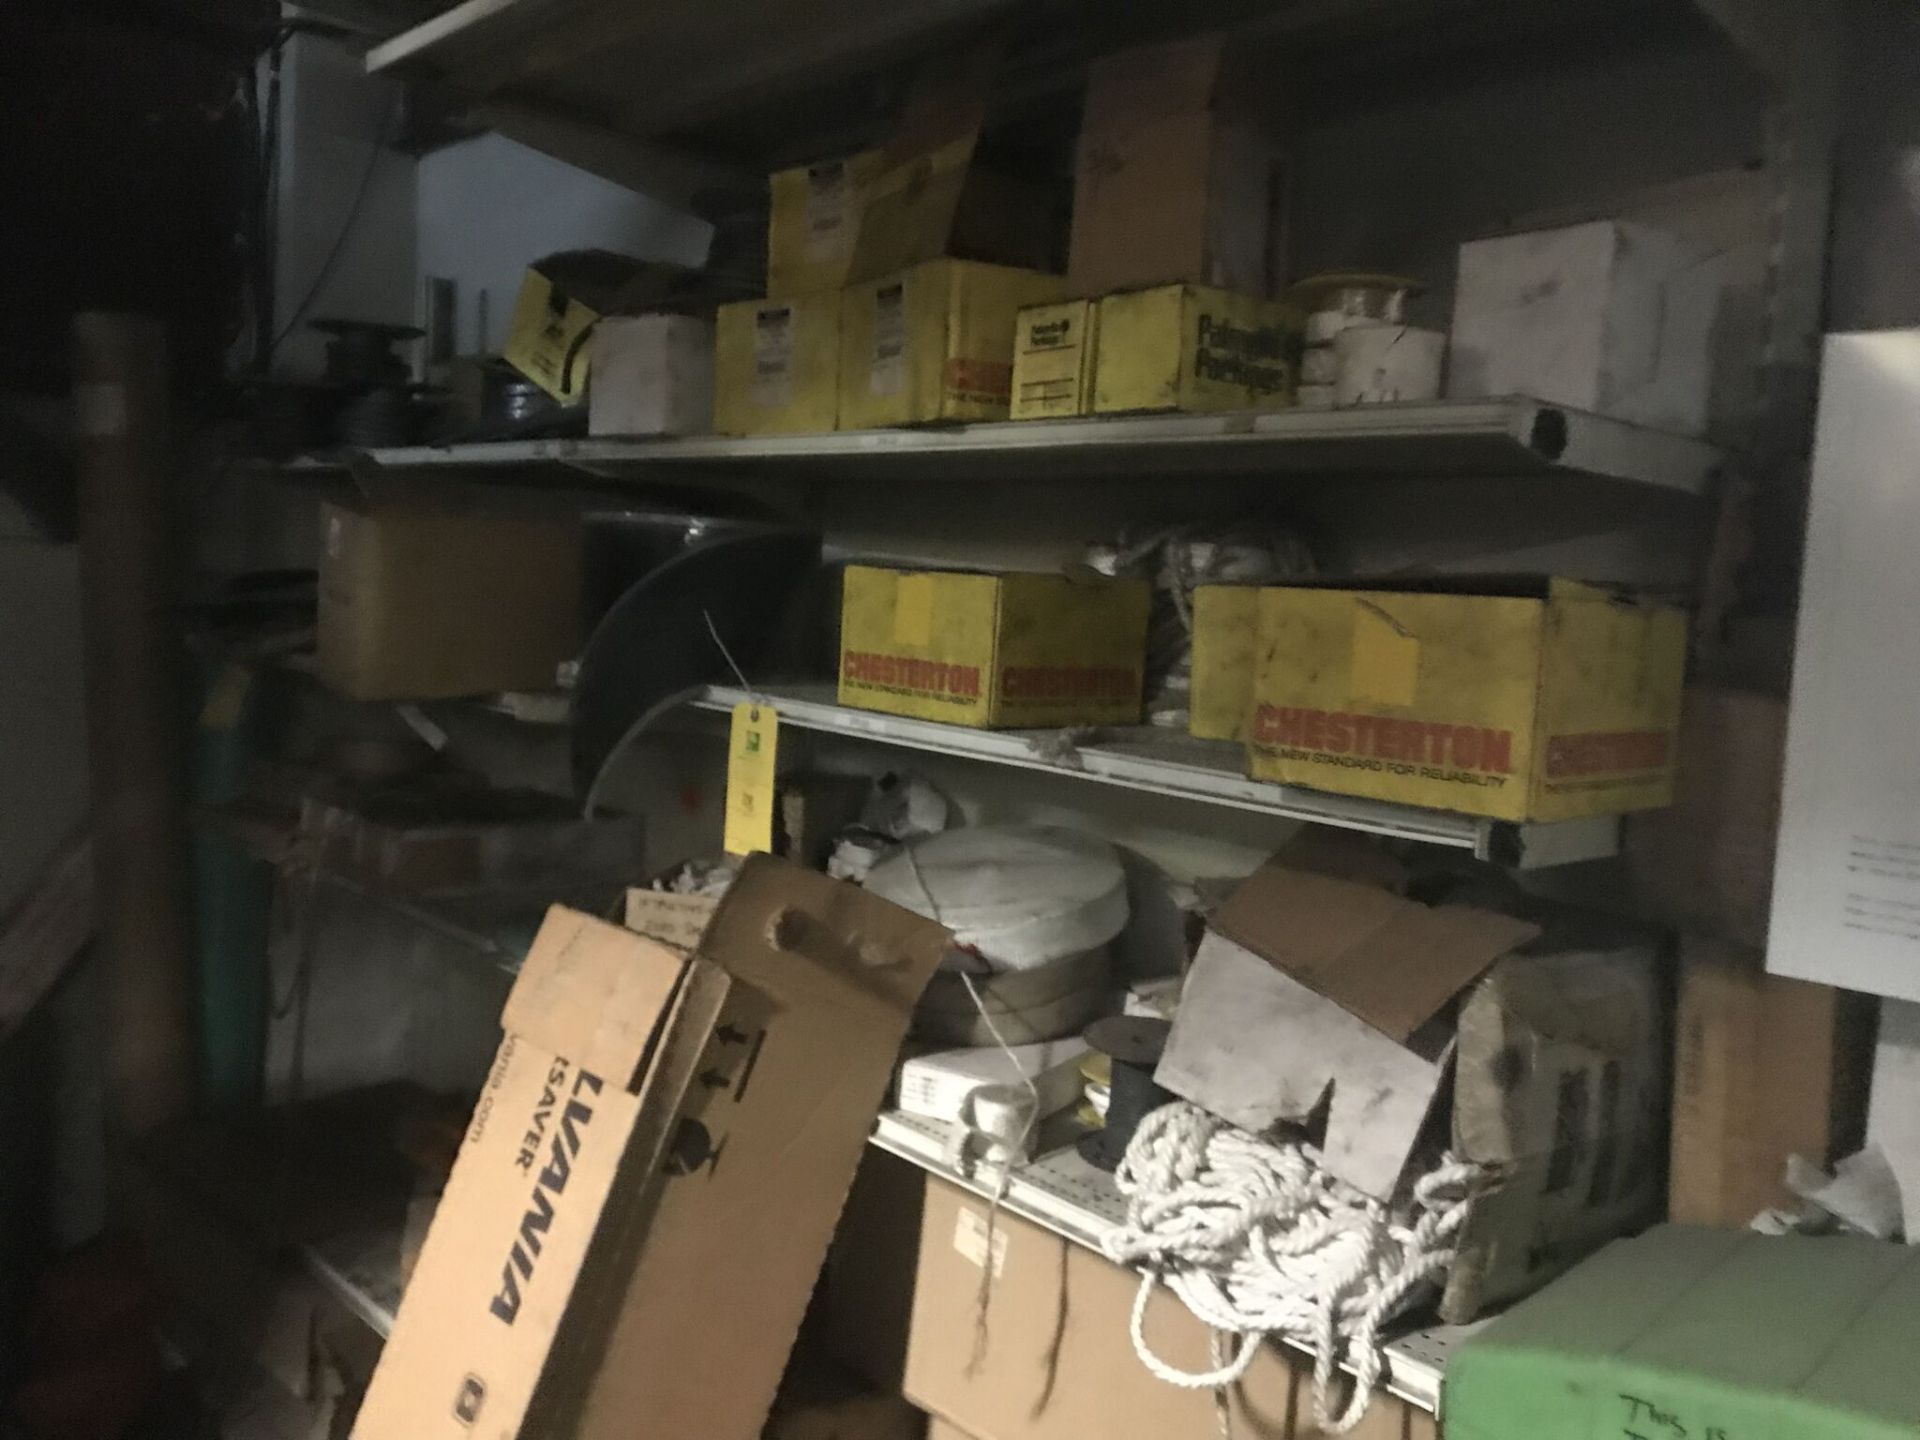 Shelves of Valve & Motor Pump Packaging